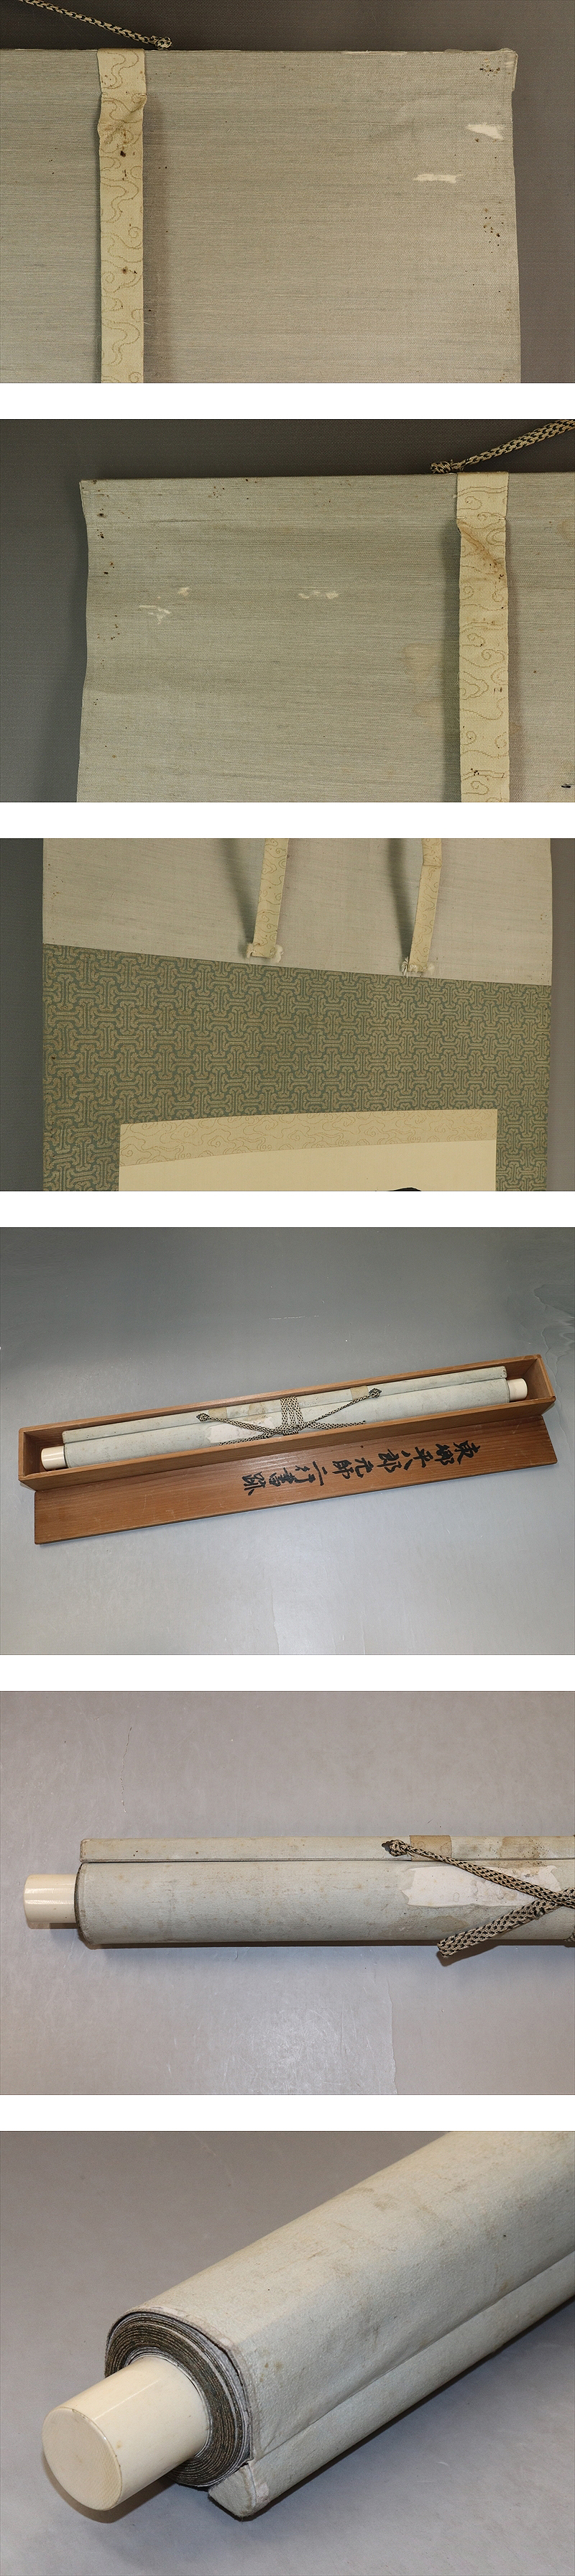 買い正本東郷平八郎◆絹本◆合箱◆掛軸 v12253 掛軸